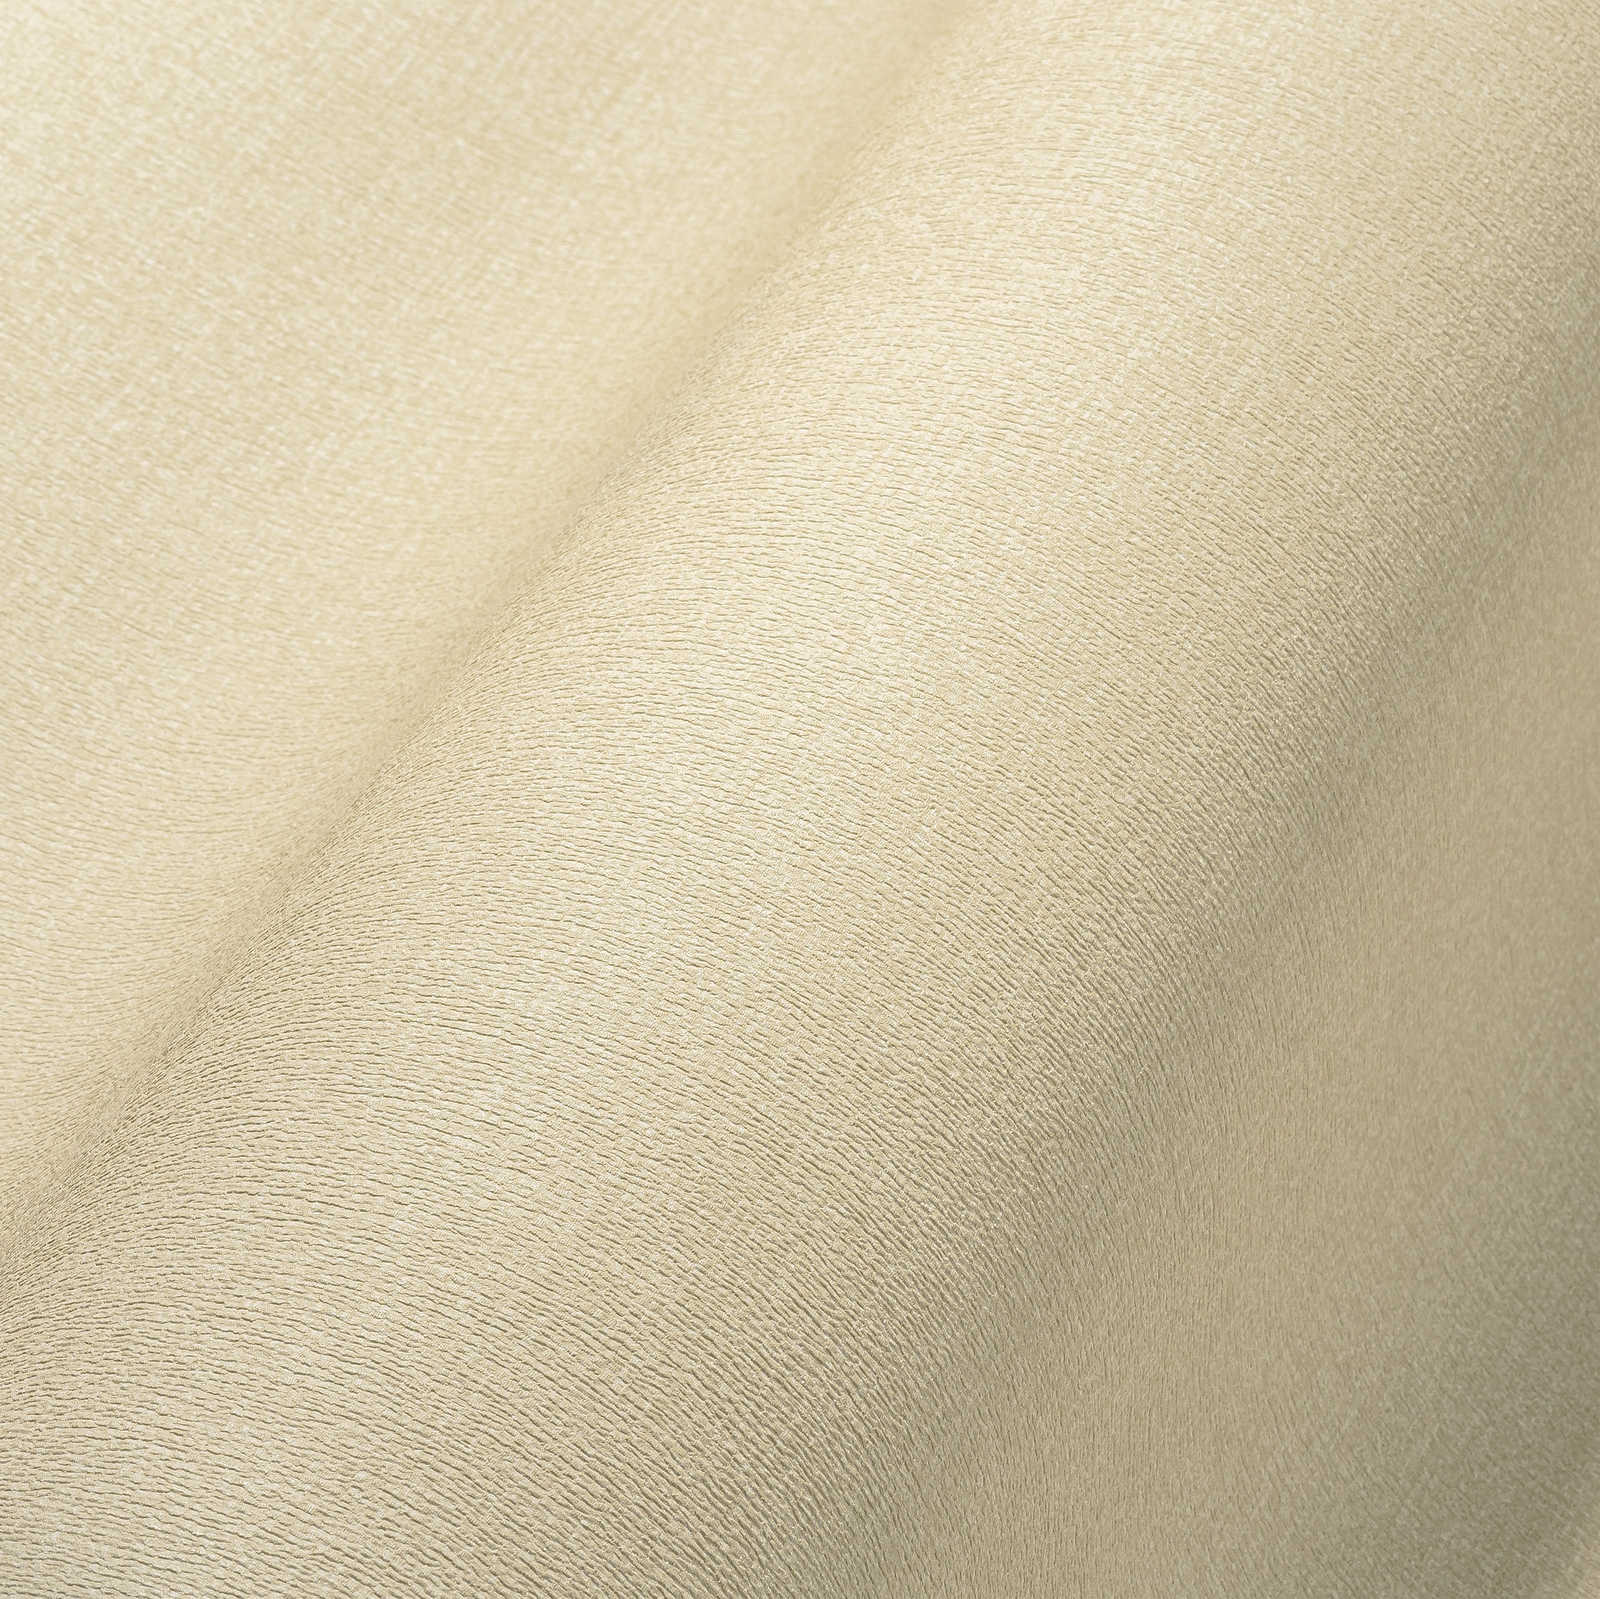             Lightly textured plain wallpaper in a warm shade - beige
        